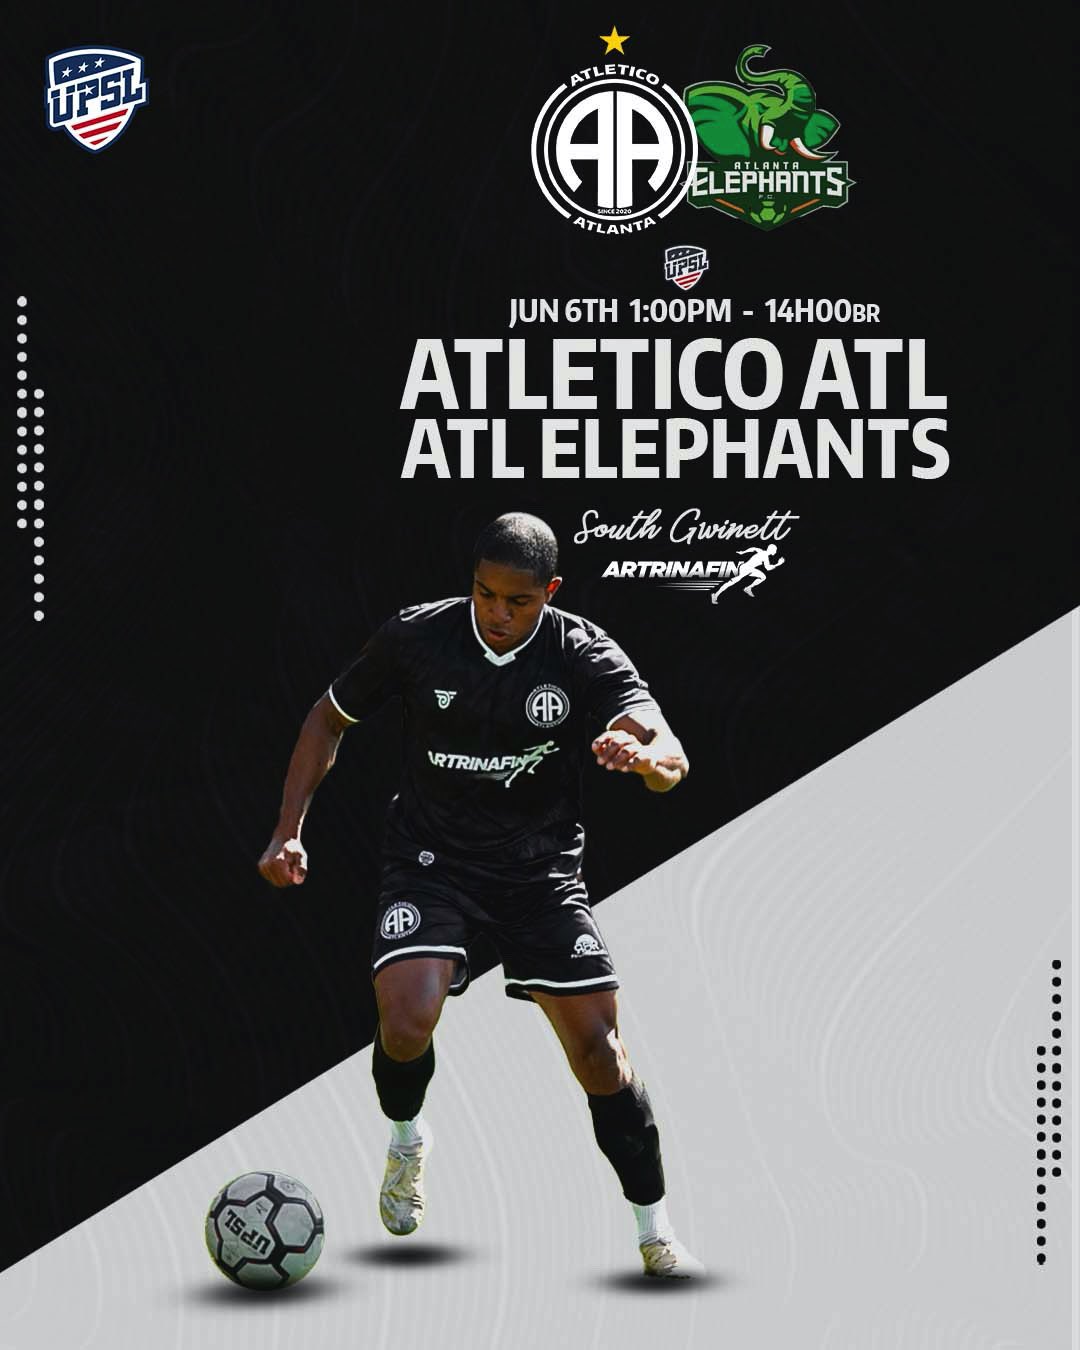 Club Atlético Atlanta - Wikidata